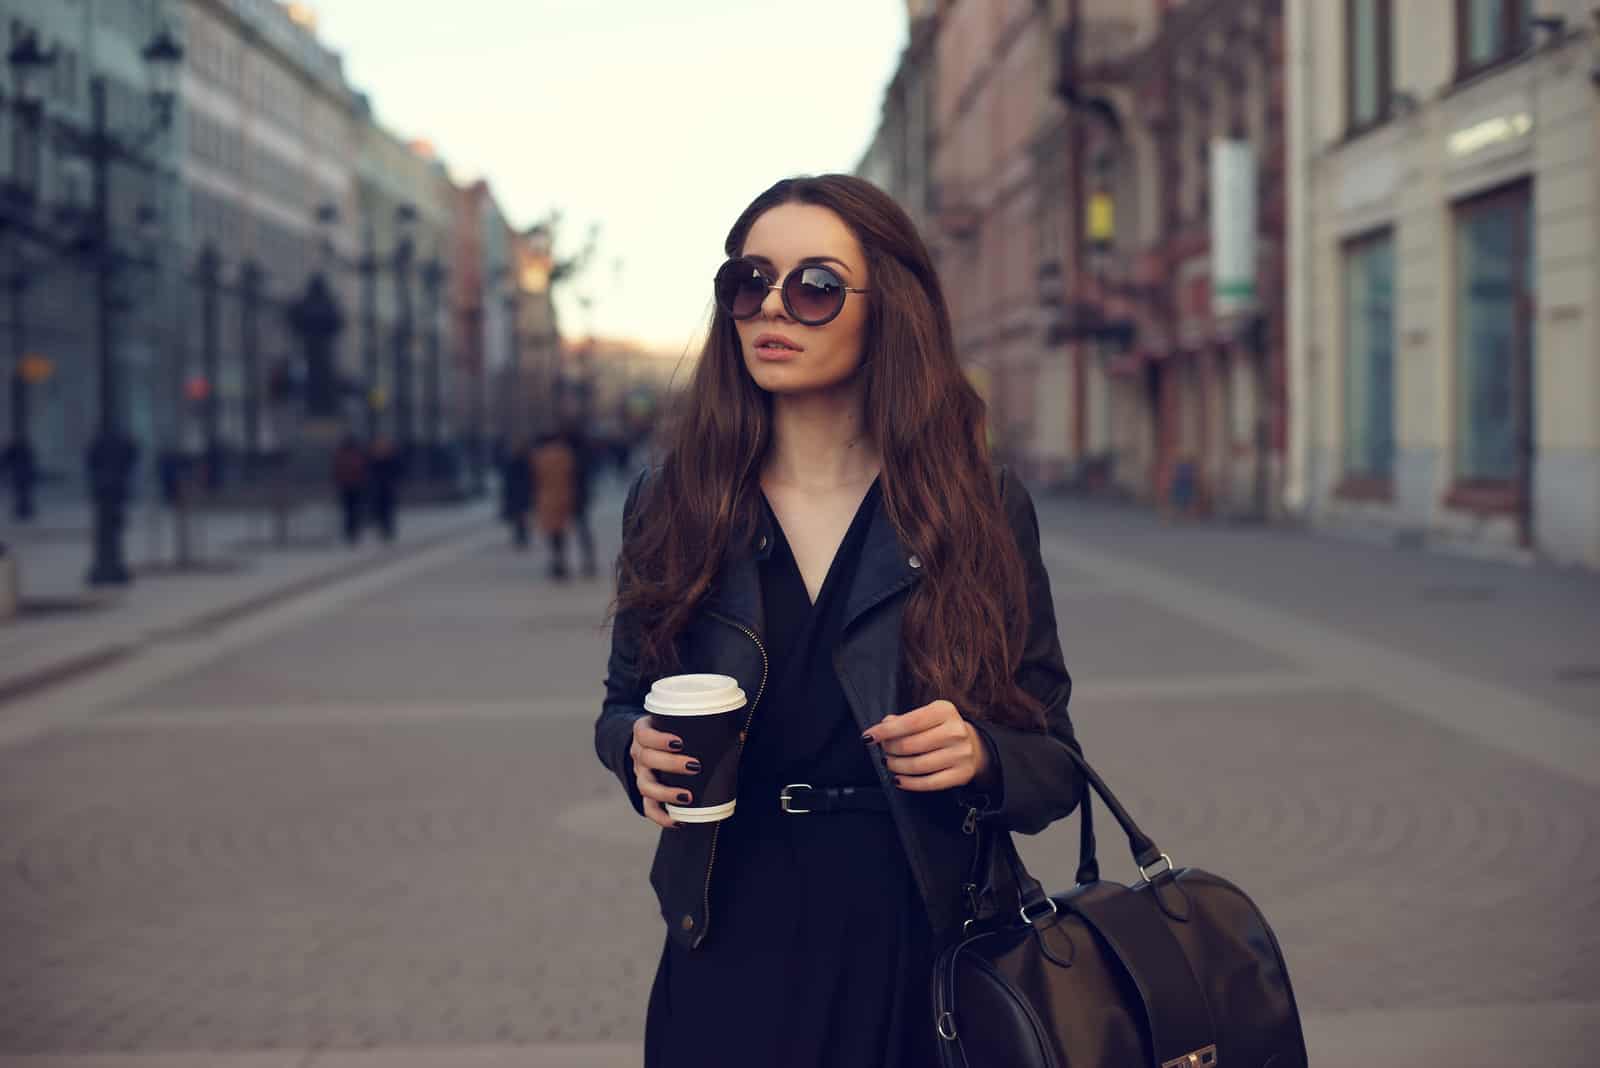 a woman with long black hair walks down the street